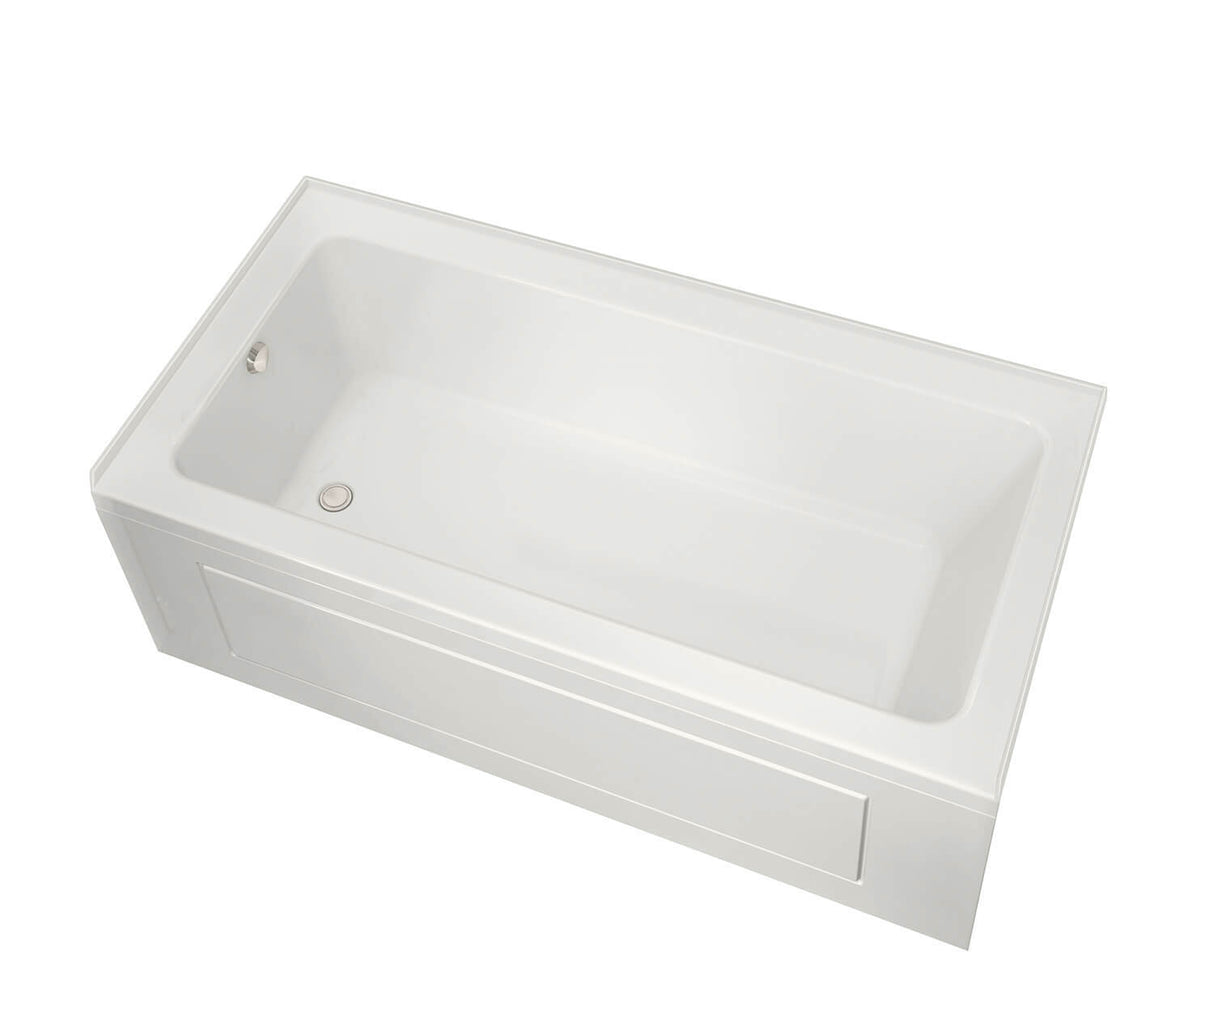 MAAX 106207-R-097-001 Pose 6636 IF Acrylic Alcove Right-Hand Drain Combined Whirlpool & Aeroeffect Bathtub in White